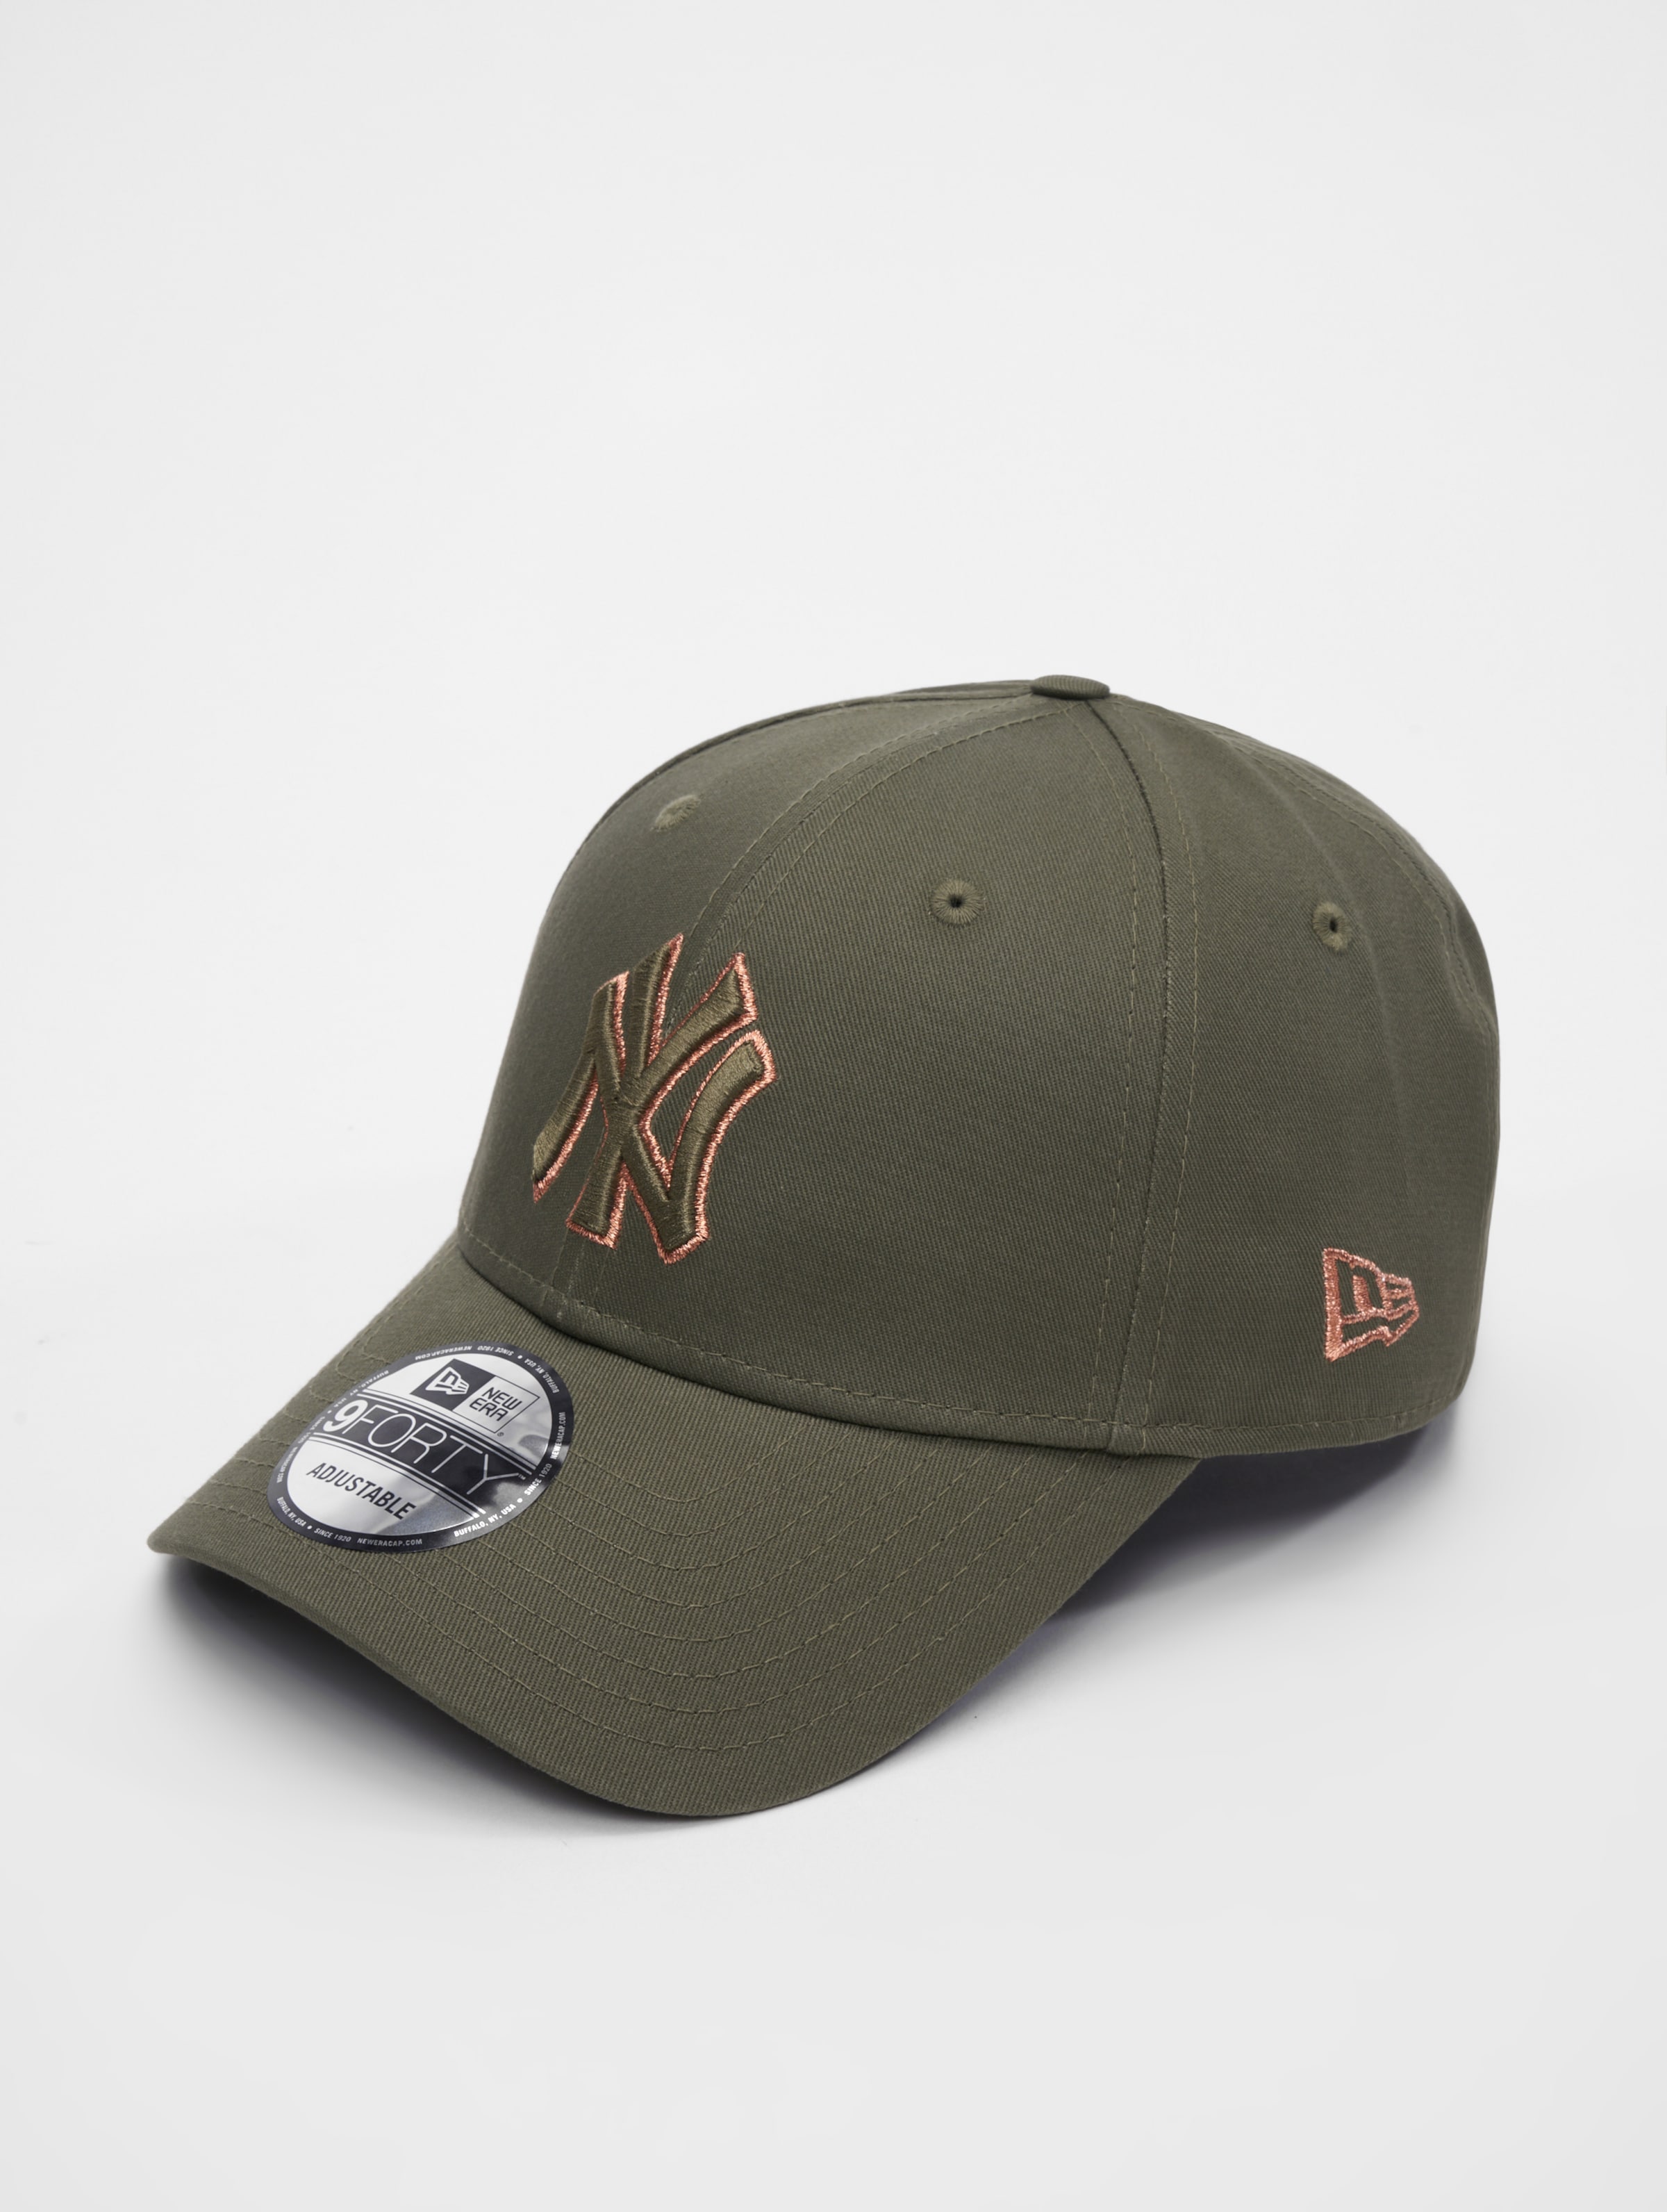 New Era - New York Yankees Metallic Outline Green 9FORTY Adjustable Cap